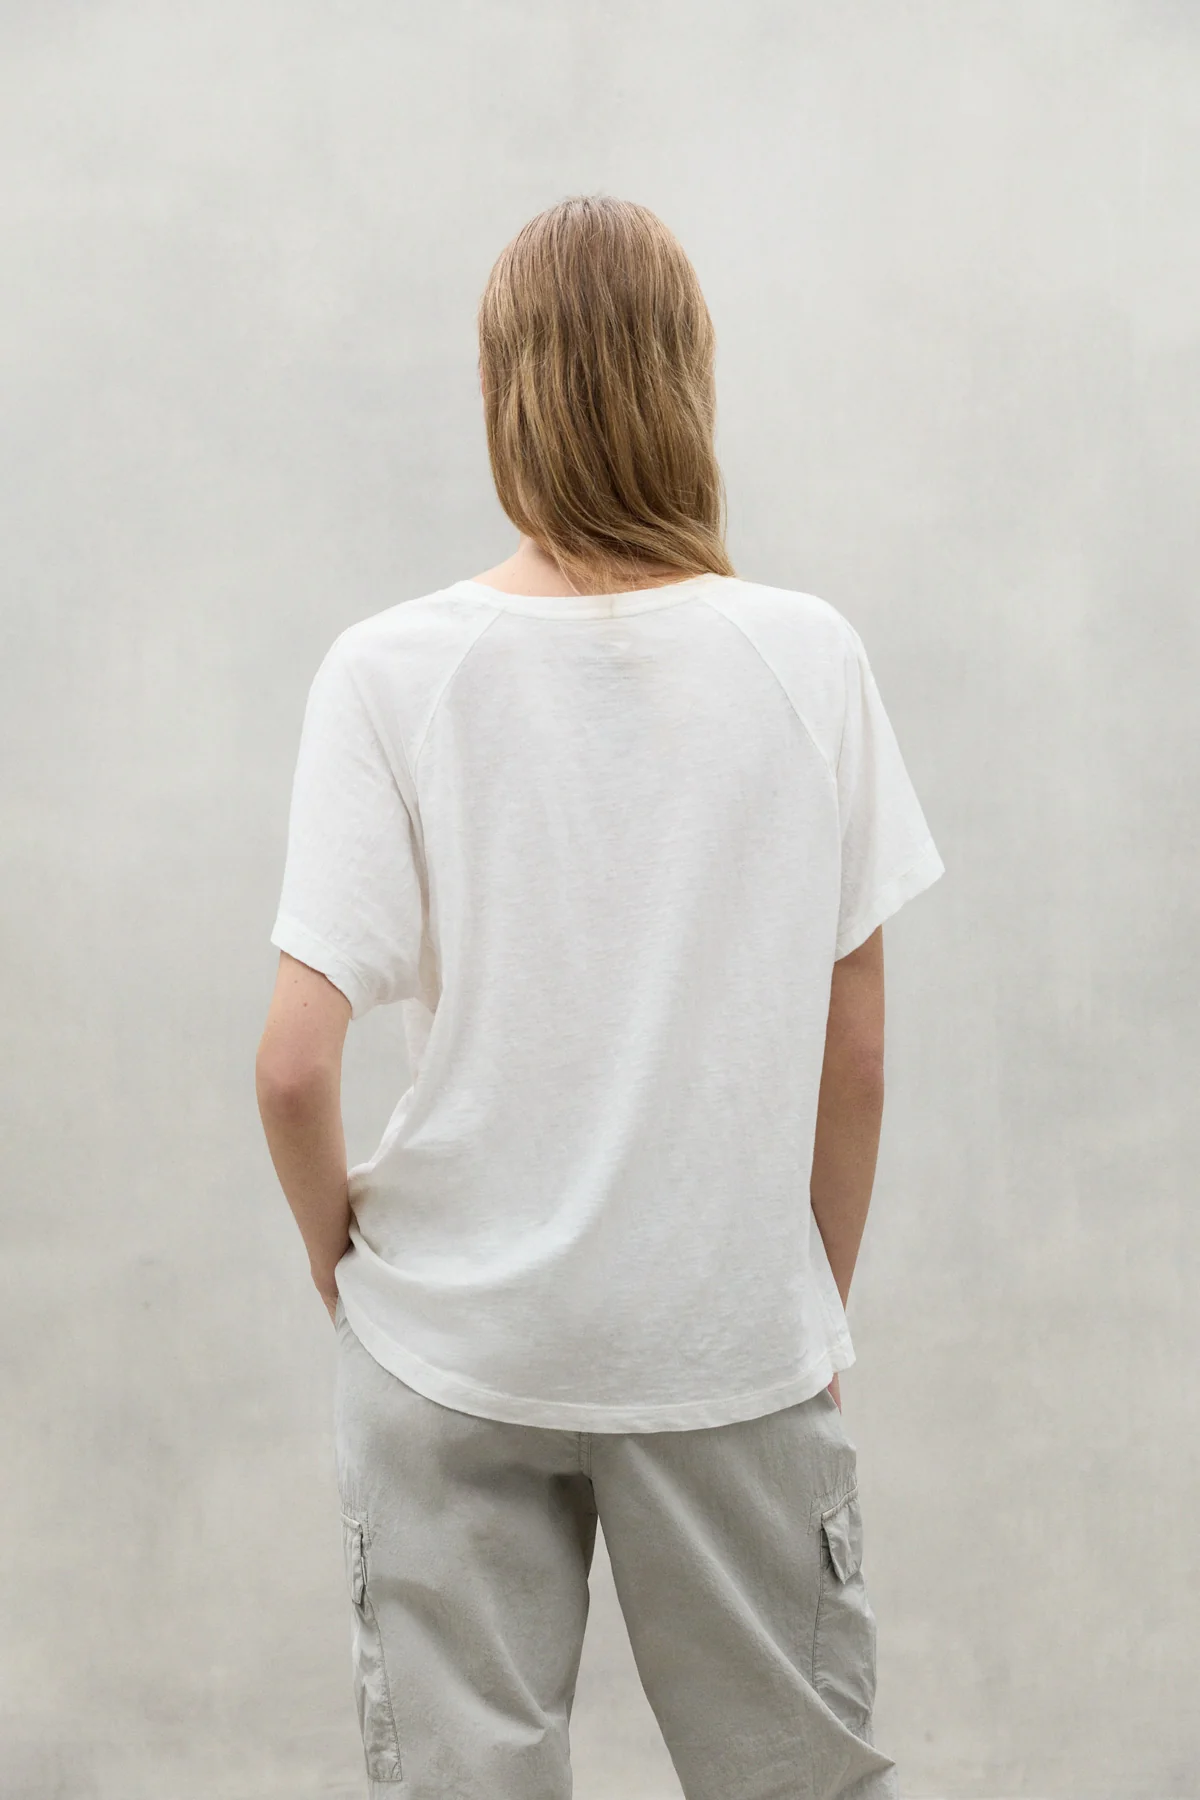 ECOALF camiseta manga corta color blanco "because" - 3